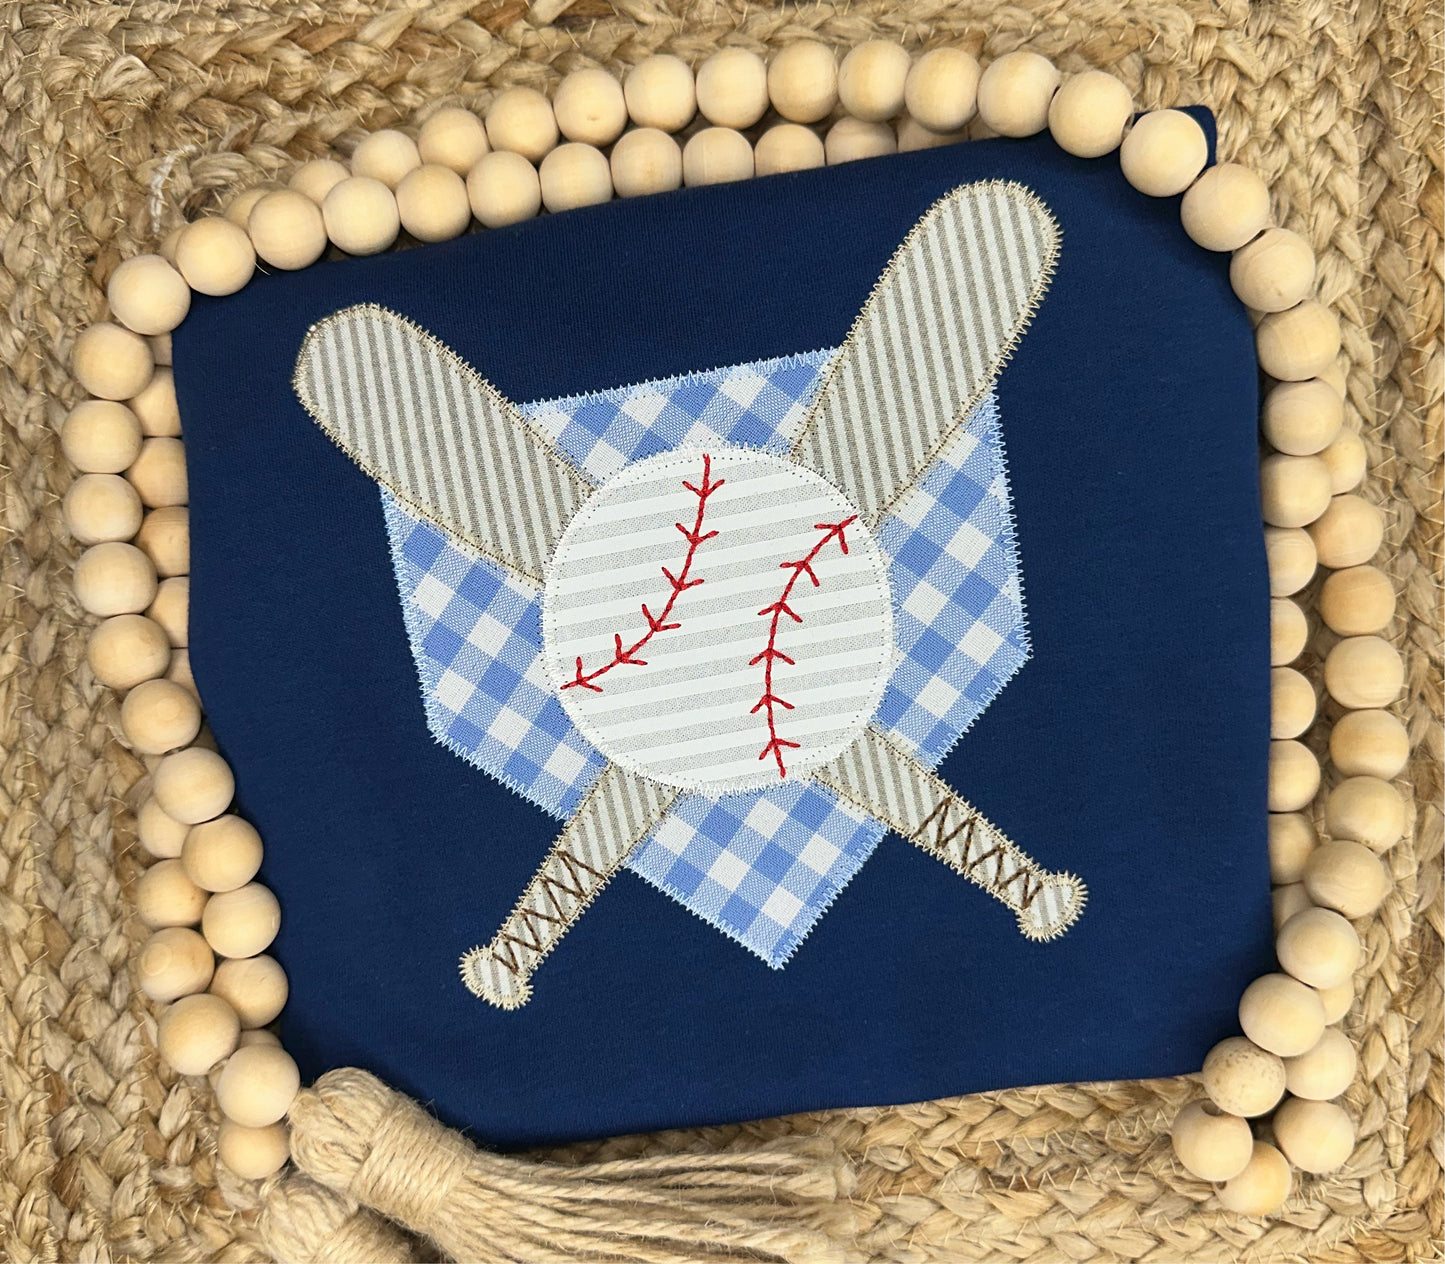 Crossed Baseball Bats on Home Plate Appliqué Shirt